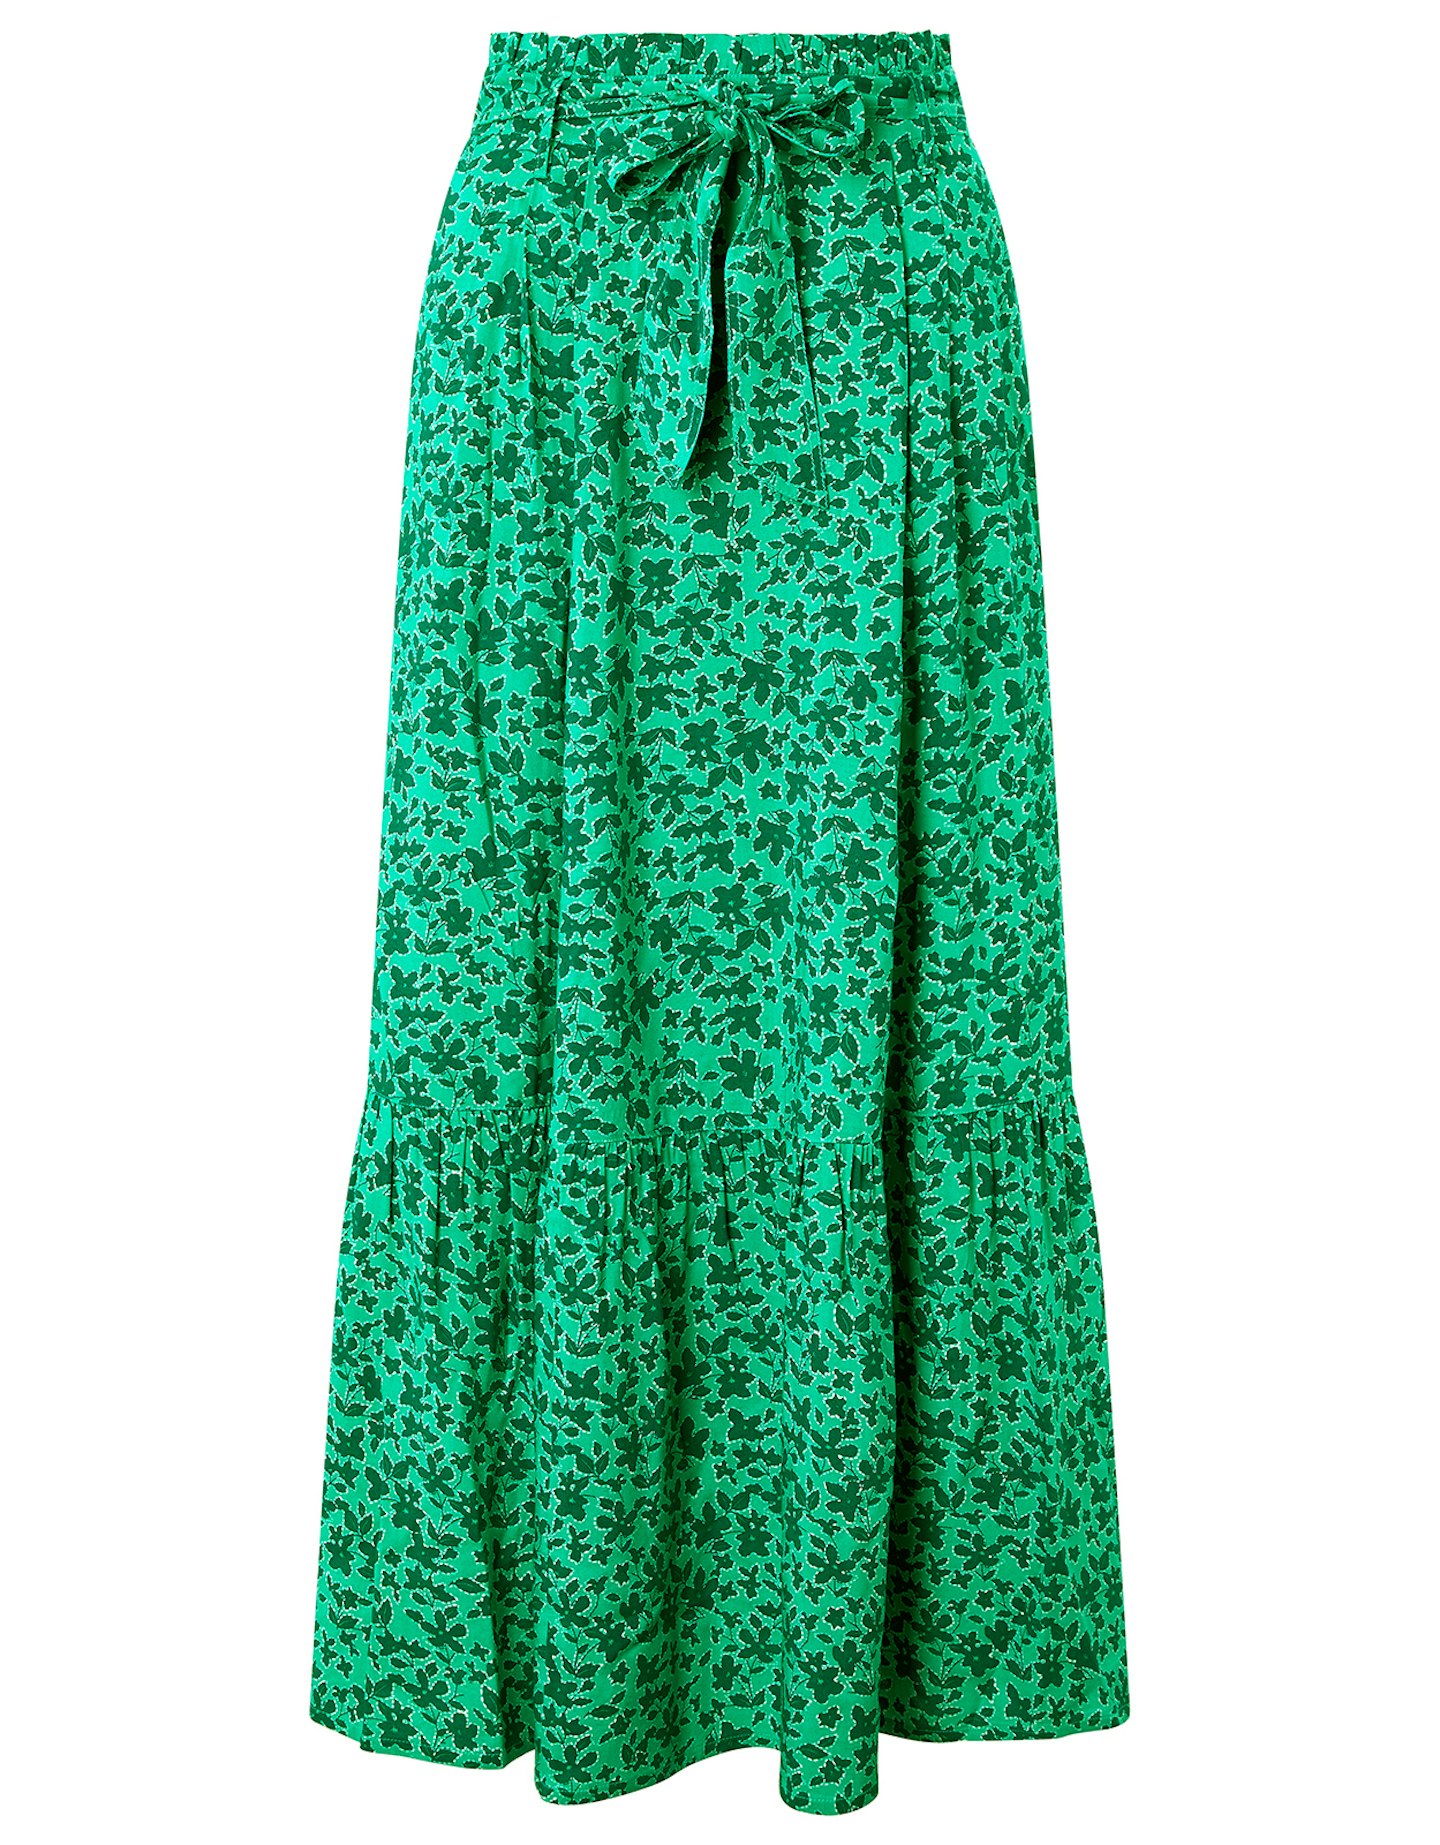 Monsoon, Manilla Floral Print Skirt, £45